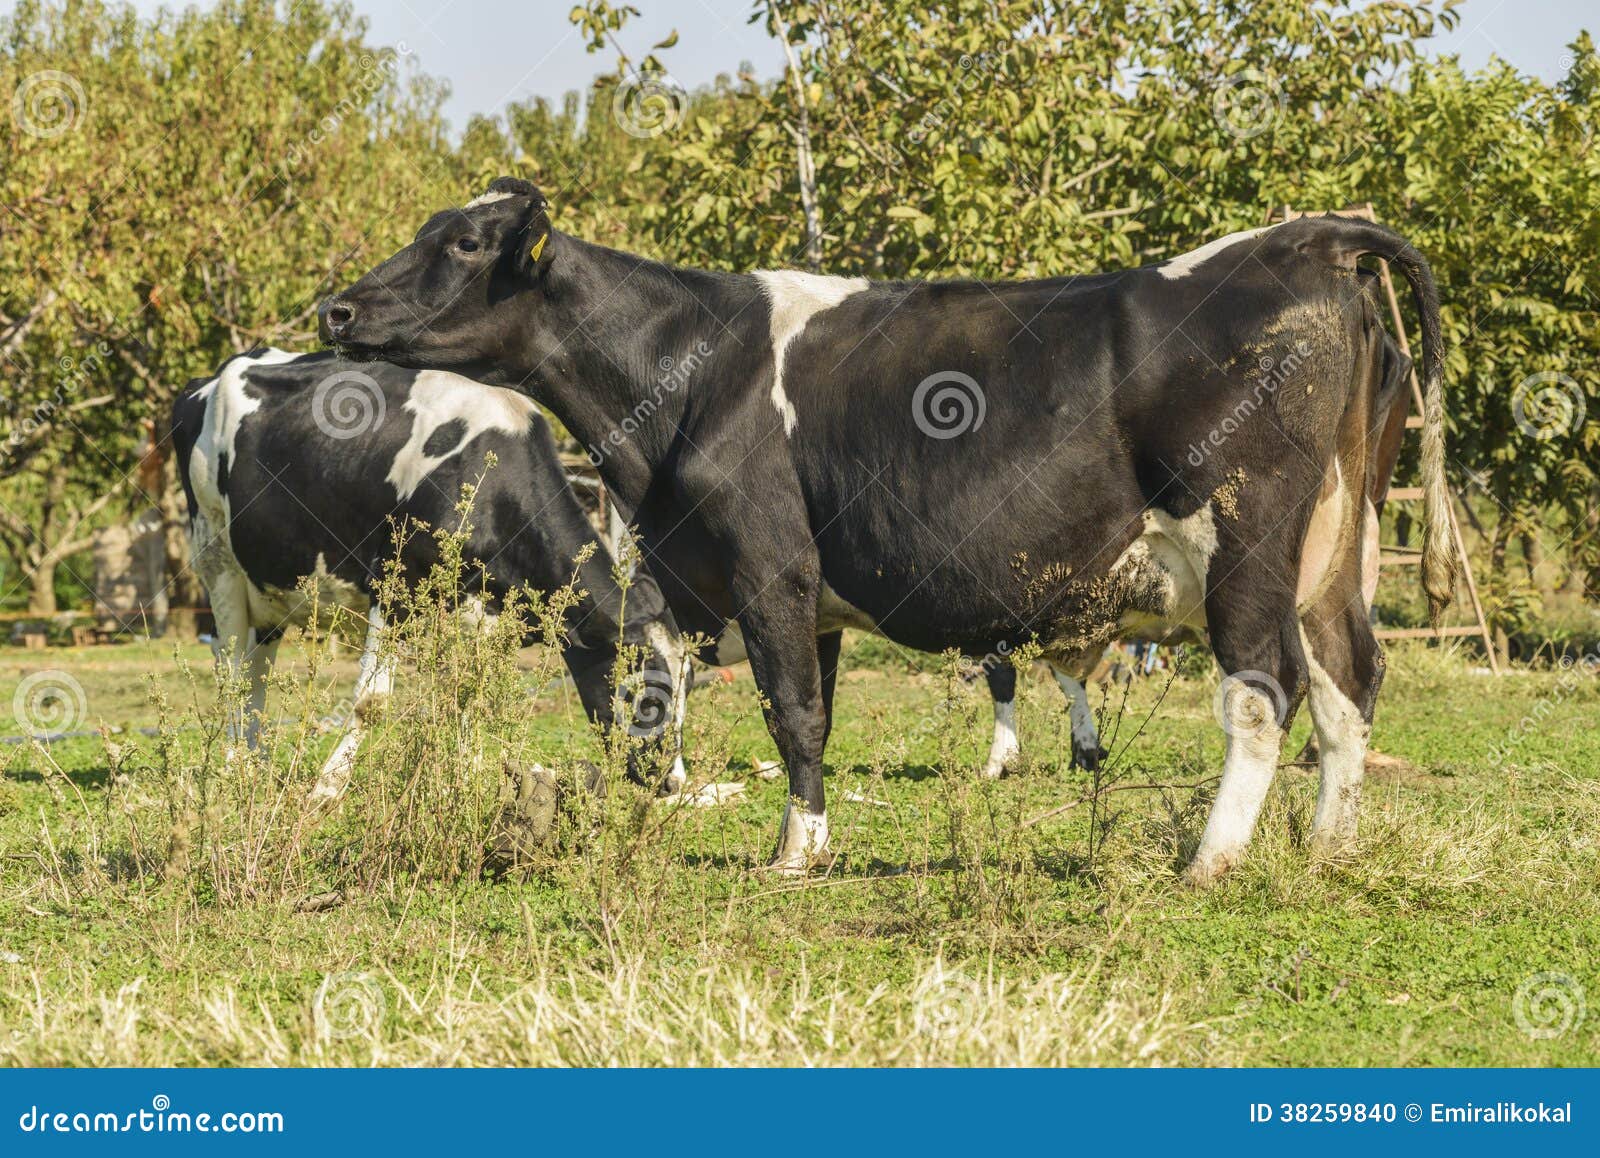 Cow farm stock photo. Image of barn, scene, large, hide - 38259840